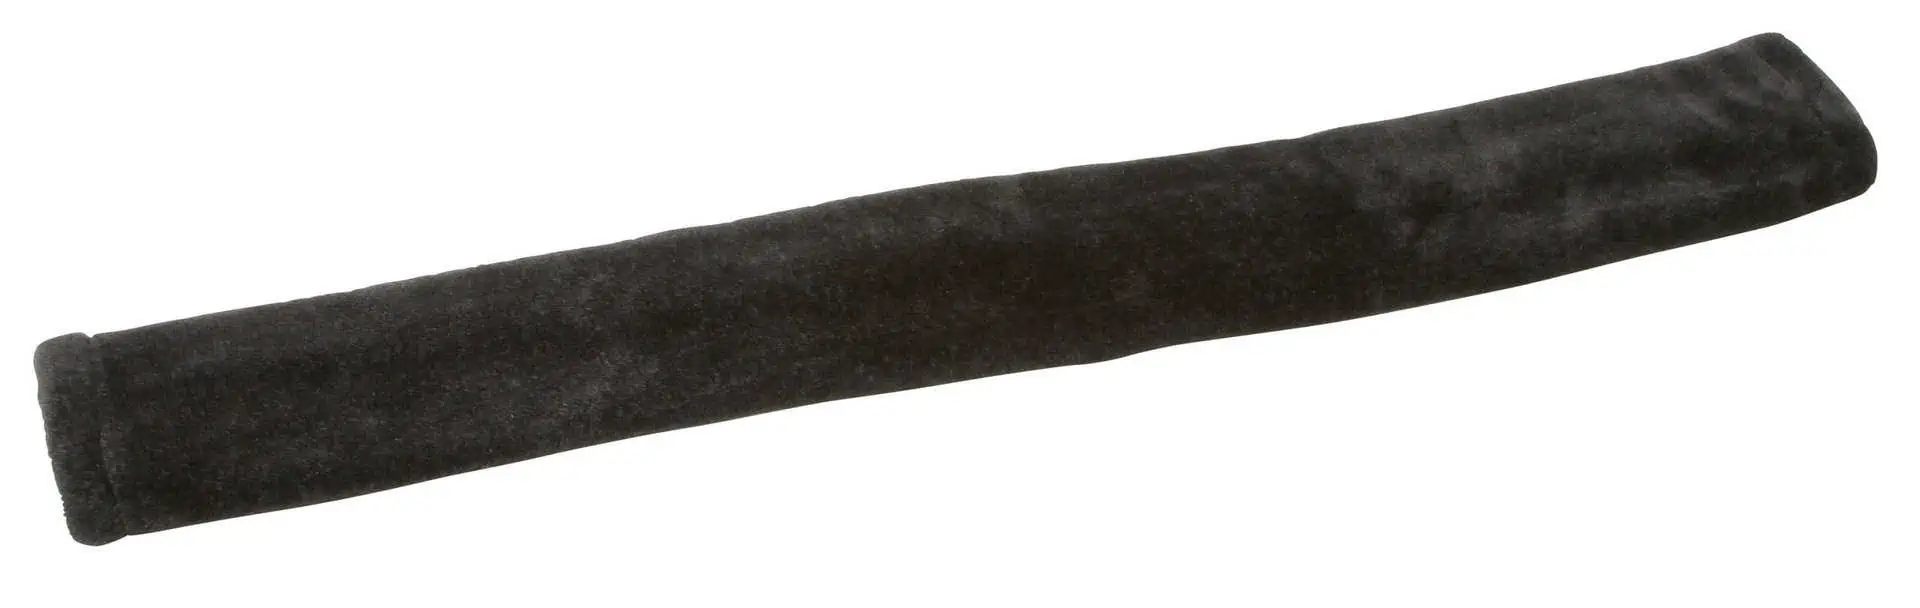 Saddle girth cover, black, 95 x 10 cm